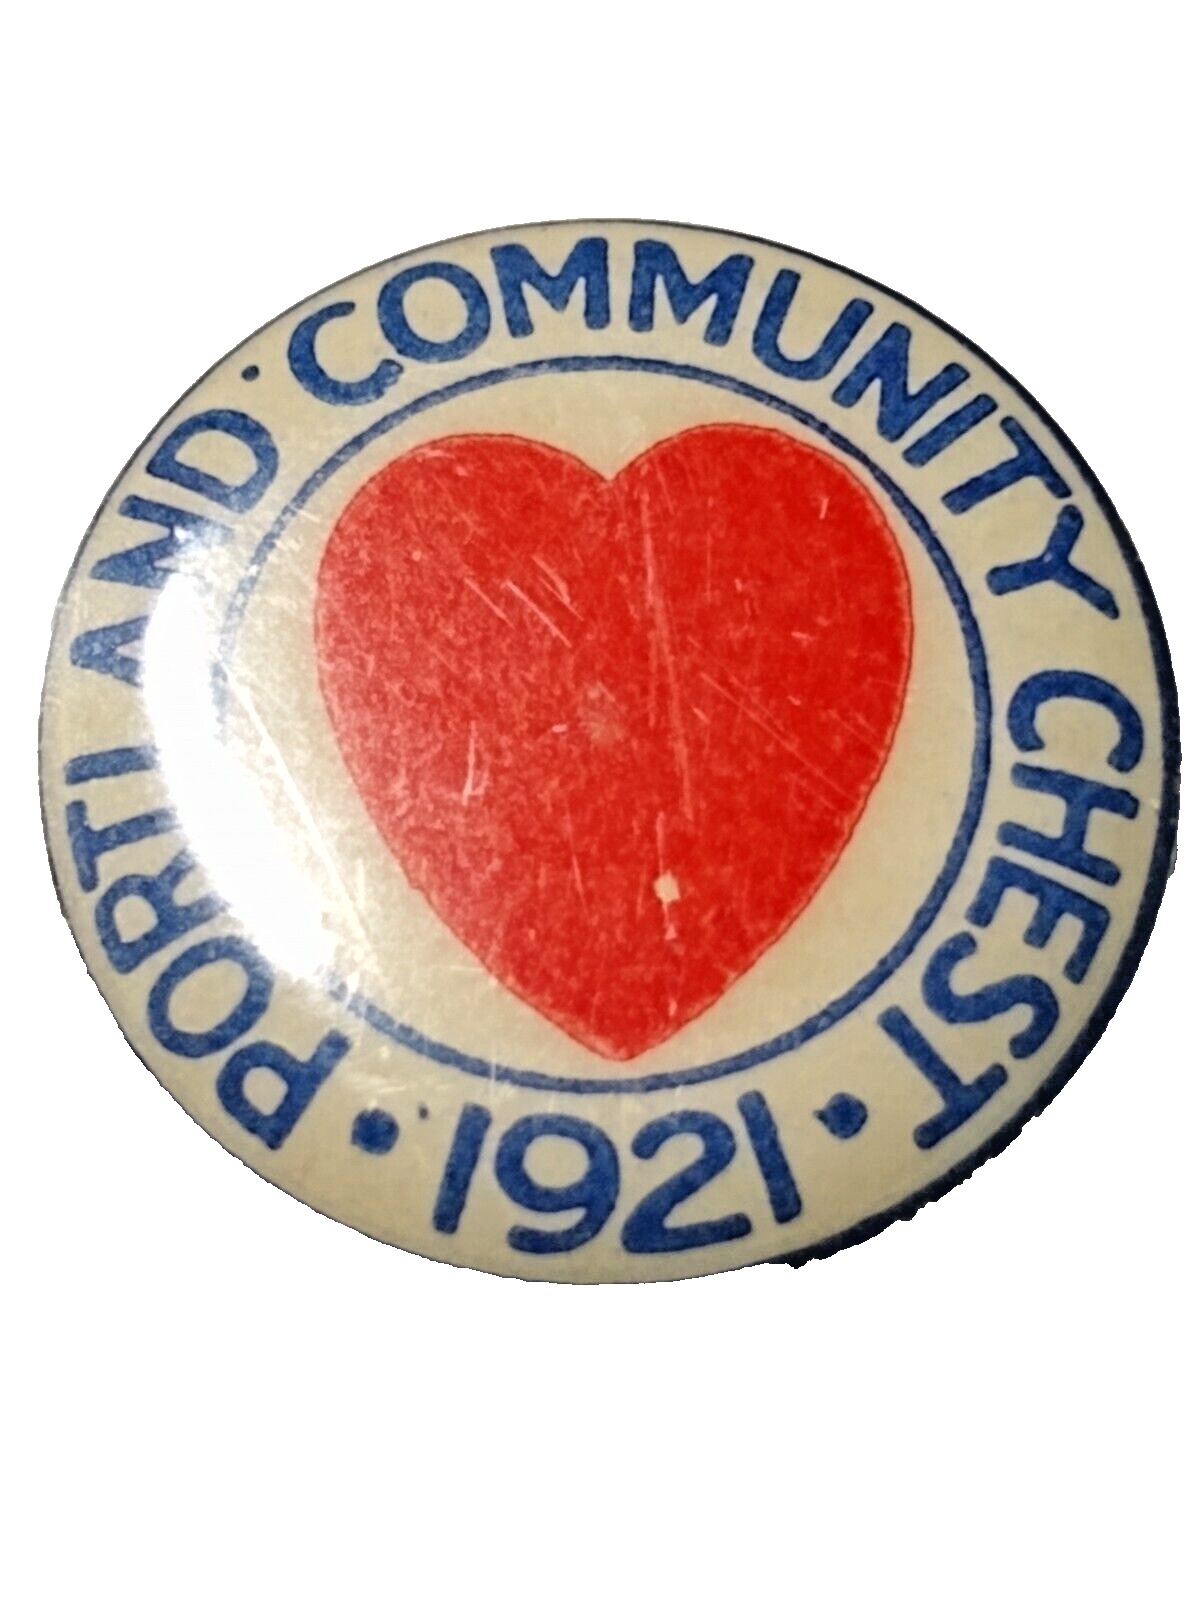 1921 Portland community chest 22.3mm button pin 